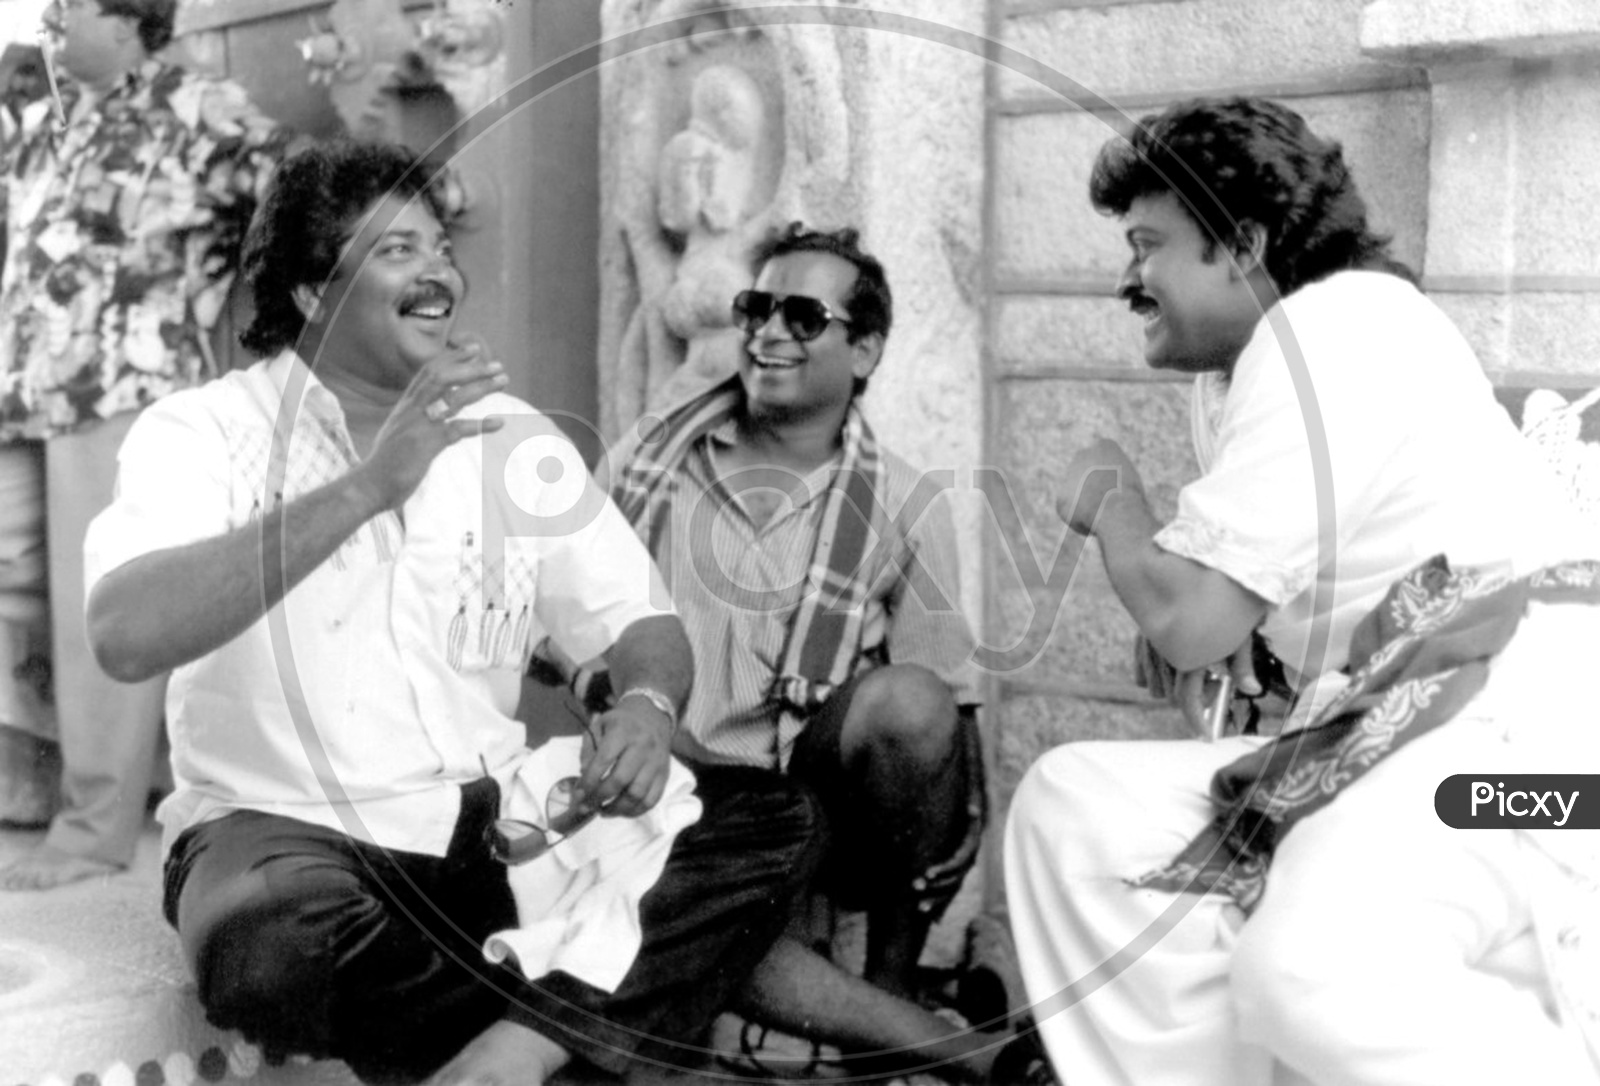 Chiranjeevi with Film Director E. V. V. Satyanarayana and Brahmanandam